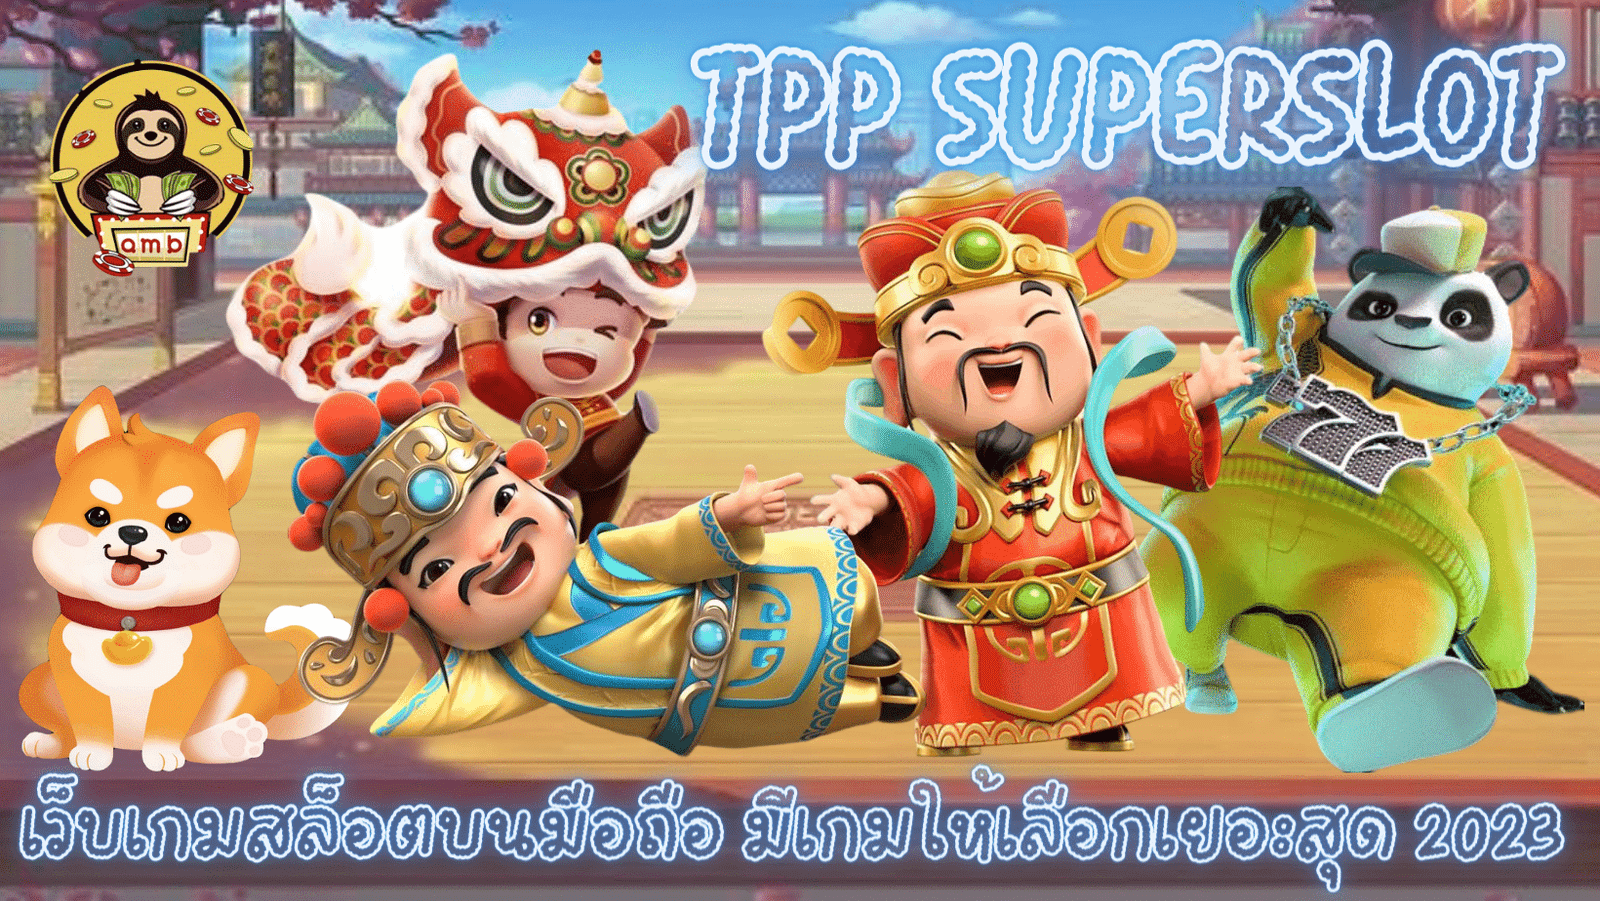 Tpp-superslot-เกมสล็อตบนมือถือ